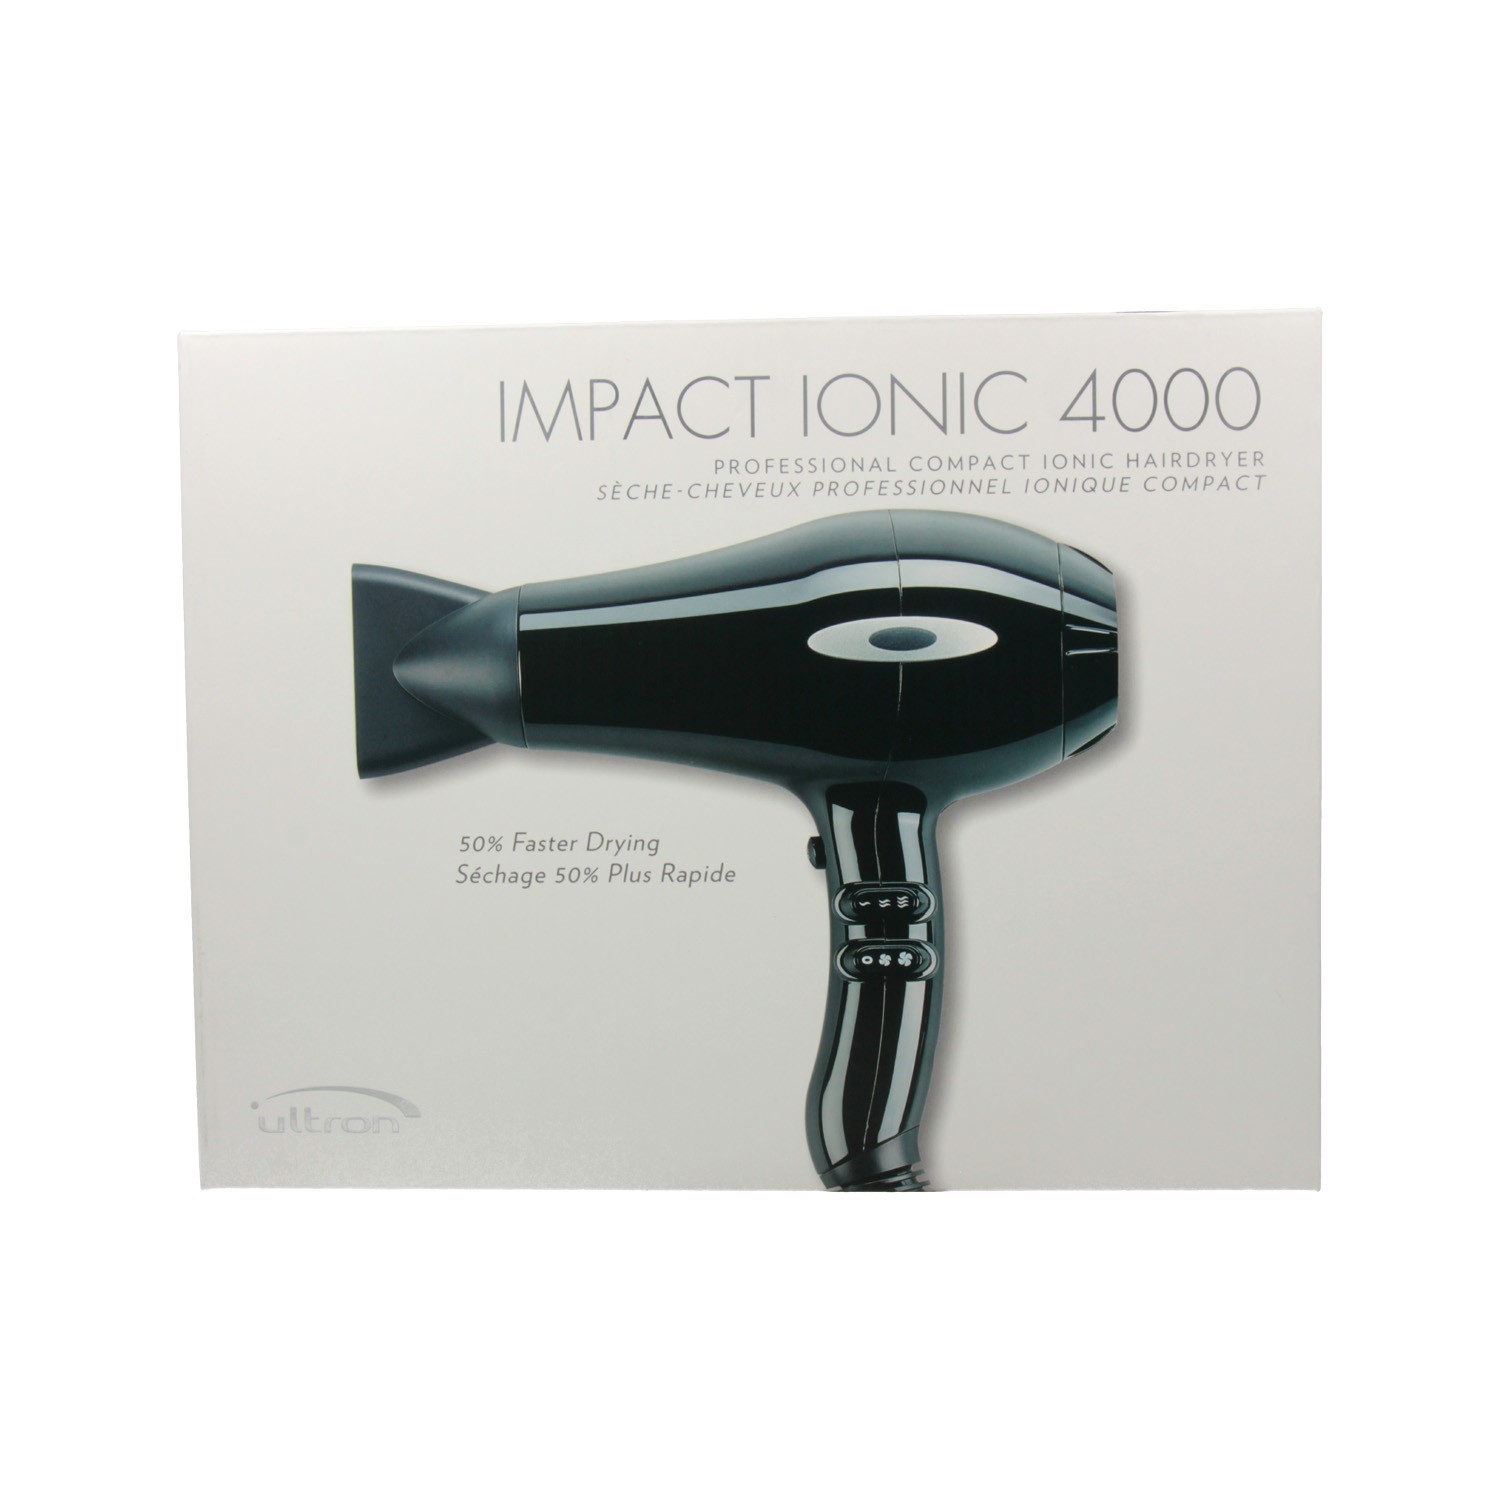 Sinelco Ultron Impact Ionic 4000 Hairdryer Black